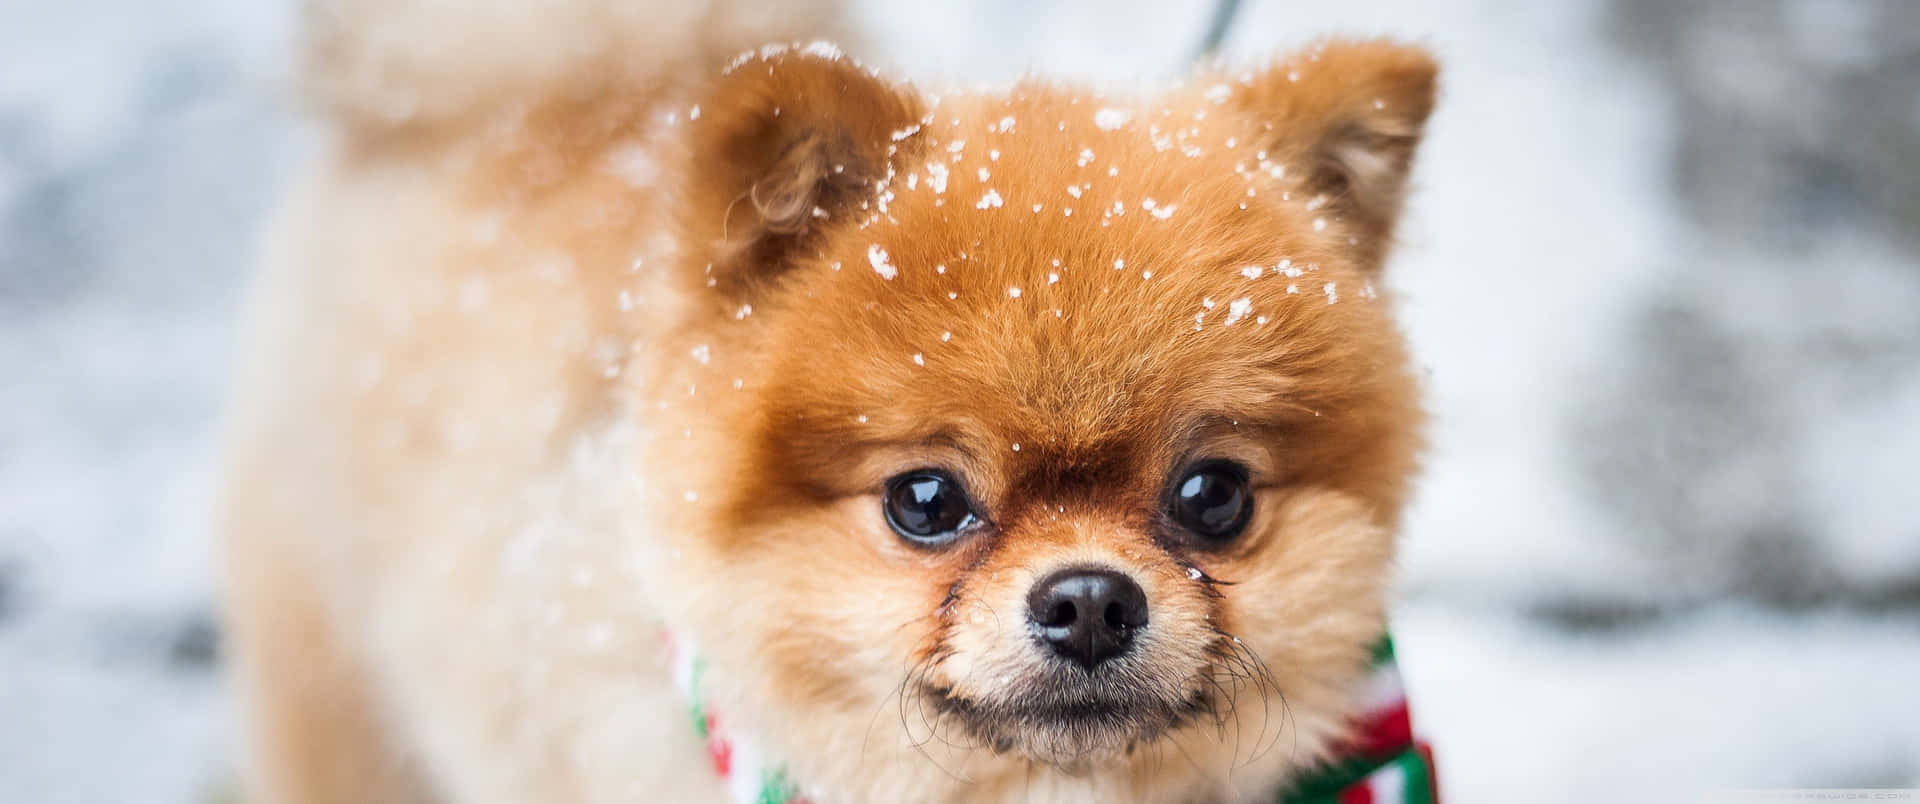 A Cute Dog Enjoys the Winter Snow Wallpaper